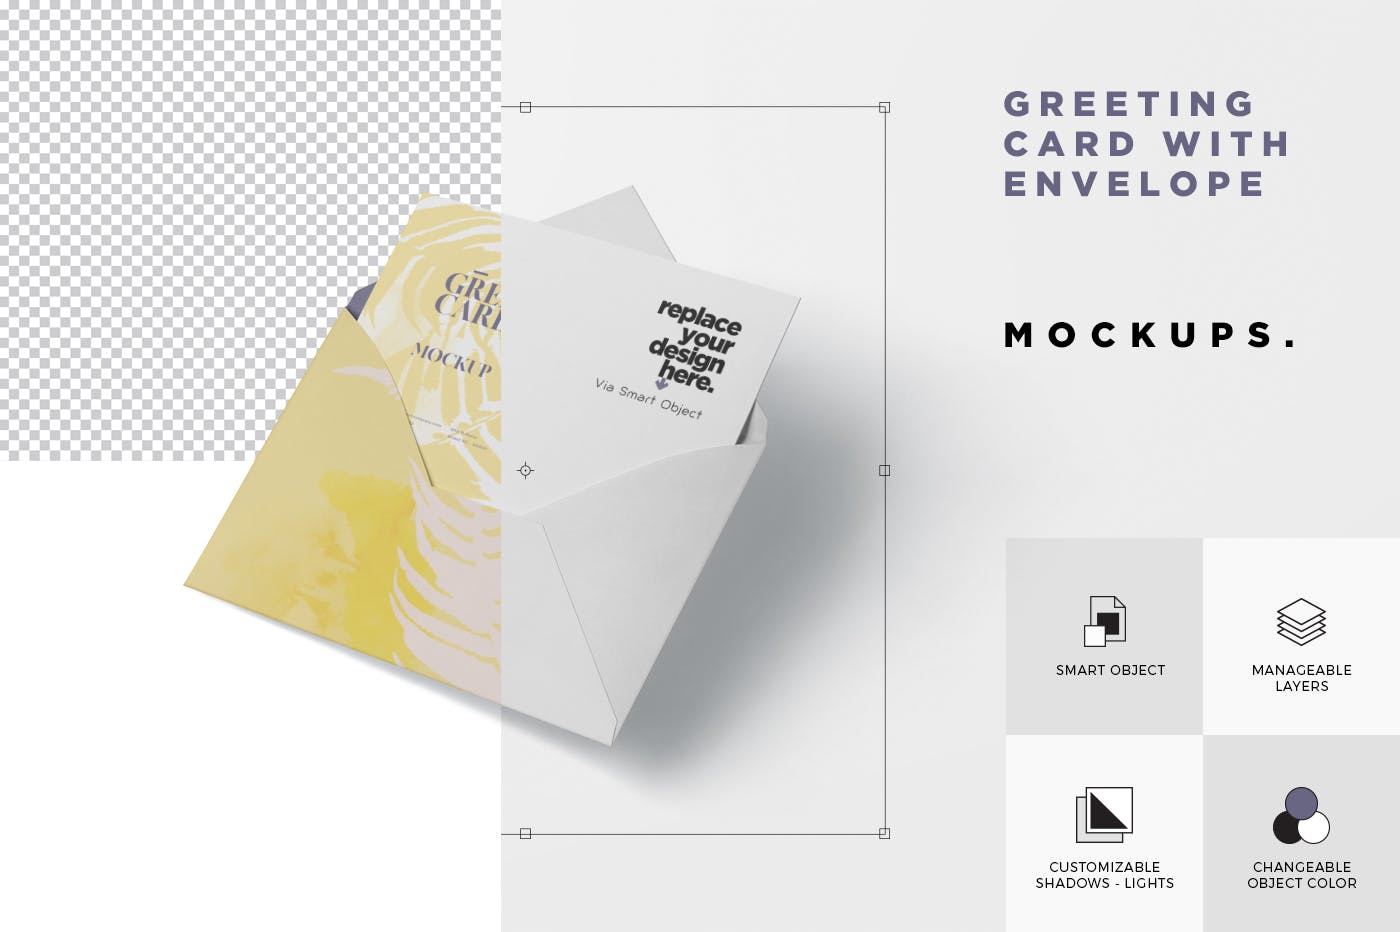 高端企业信封&贺卡设计图非凡图库精选 Greeting Card Mockup with Envelope – A6 Size插图(5)